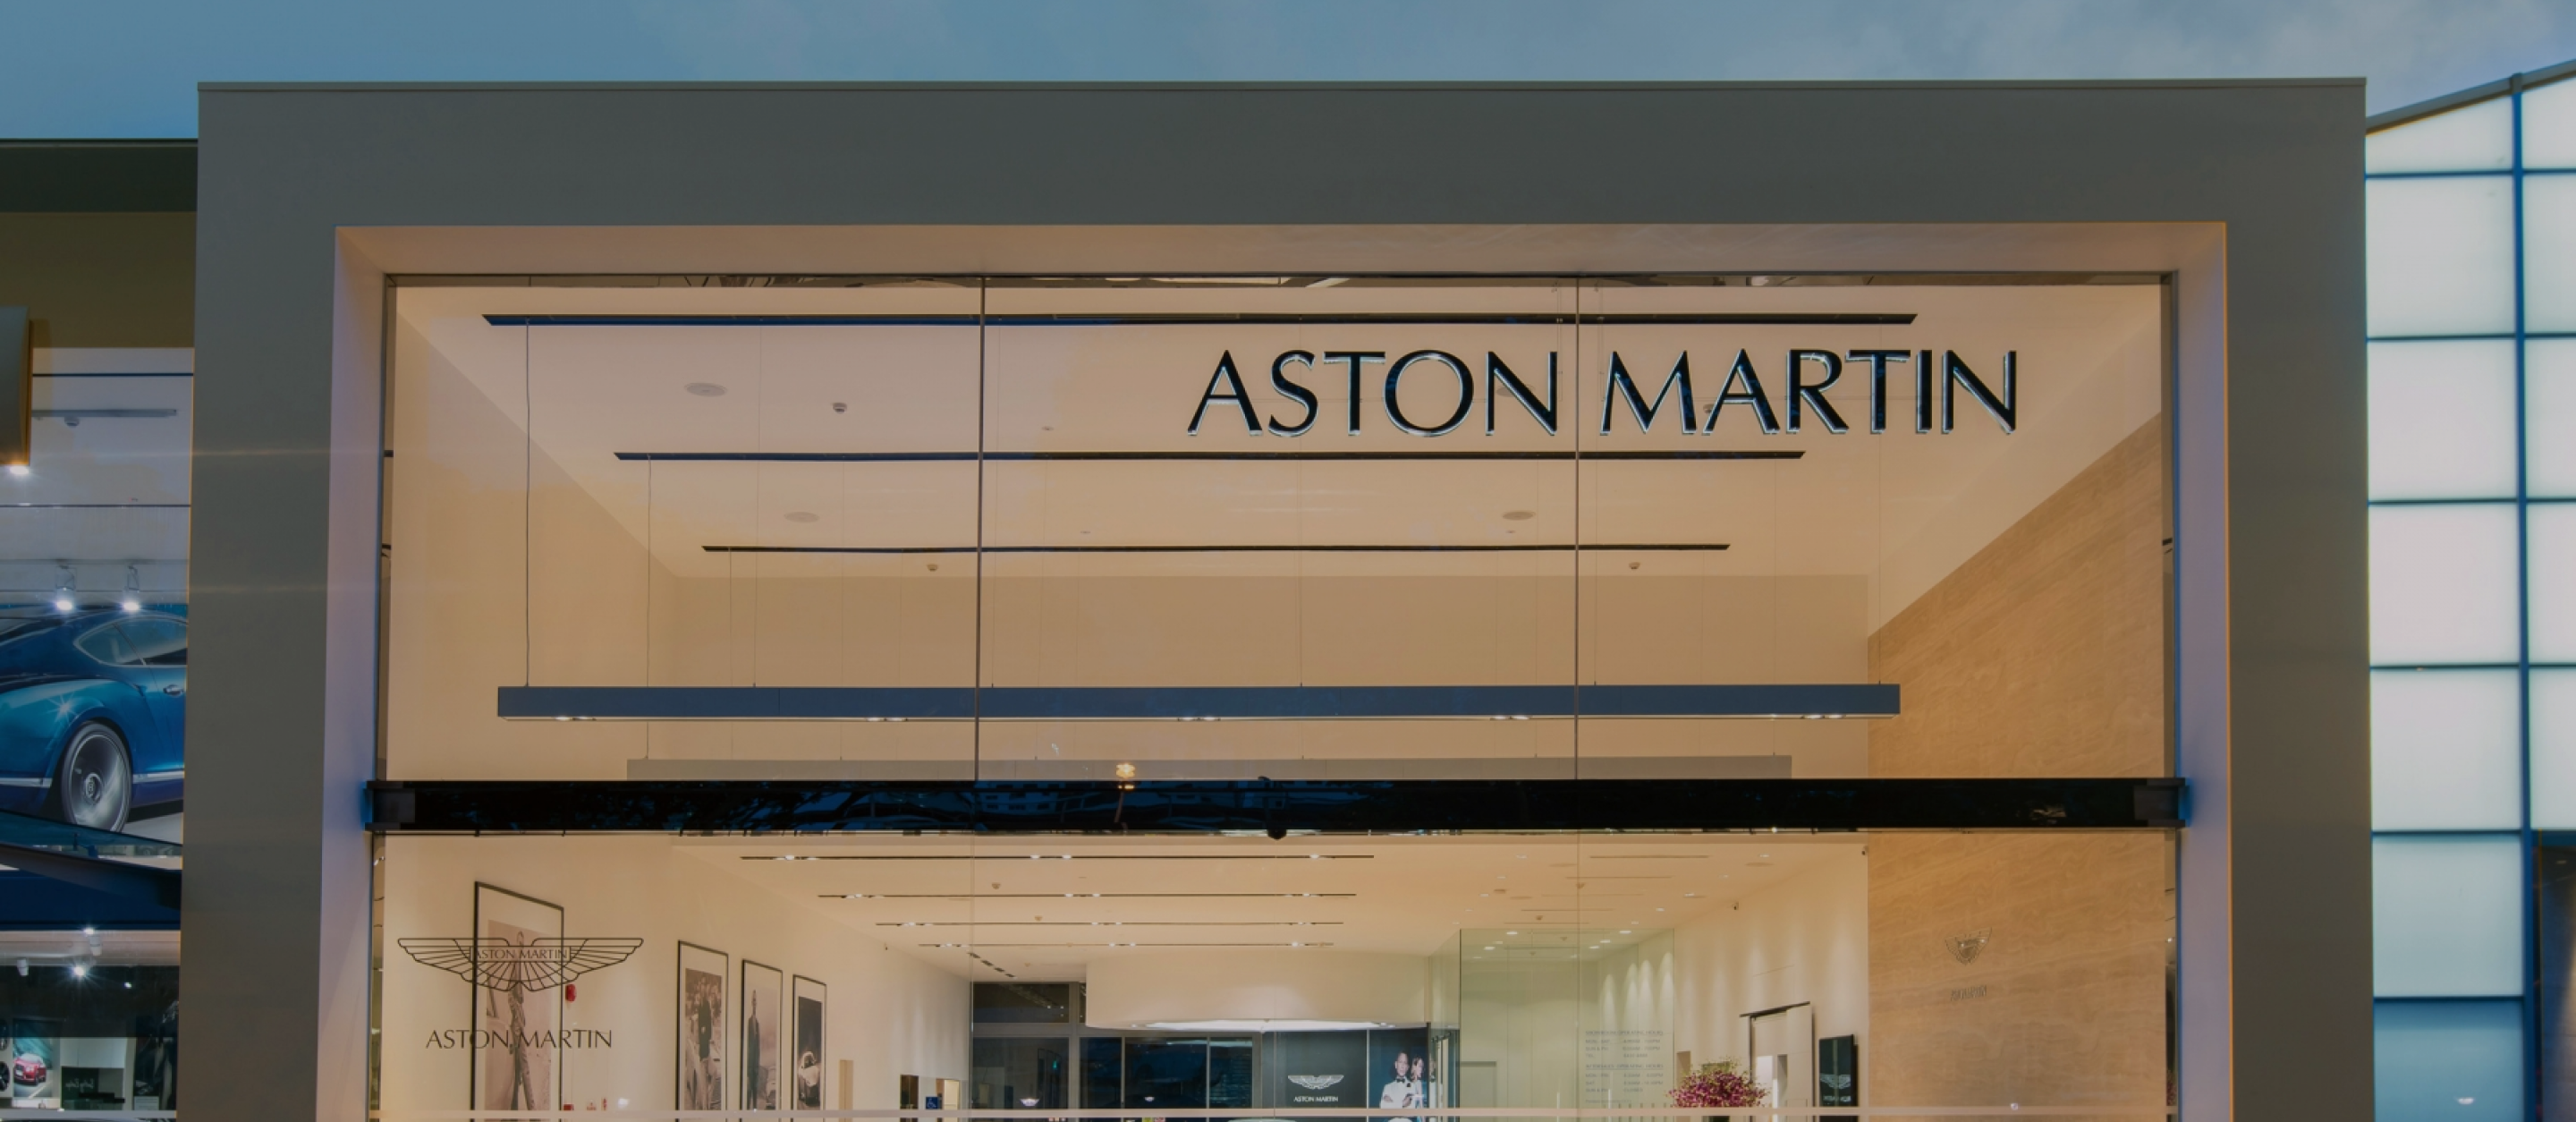 Aston Martin全車系甲乙丙式車體險